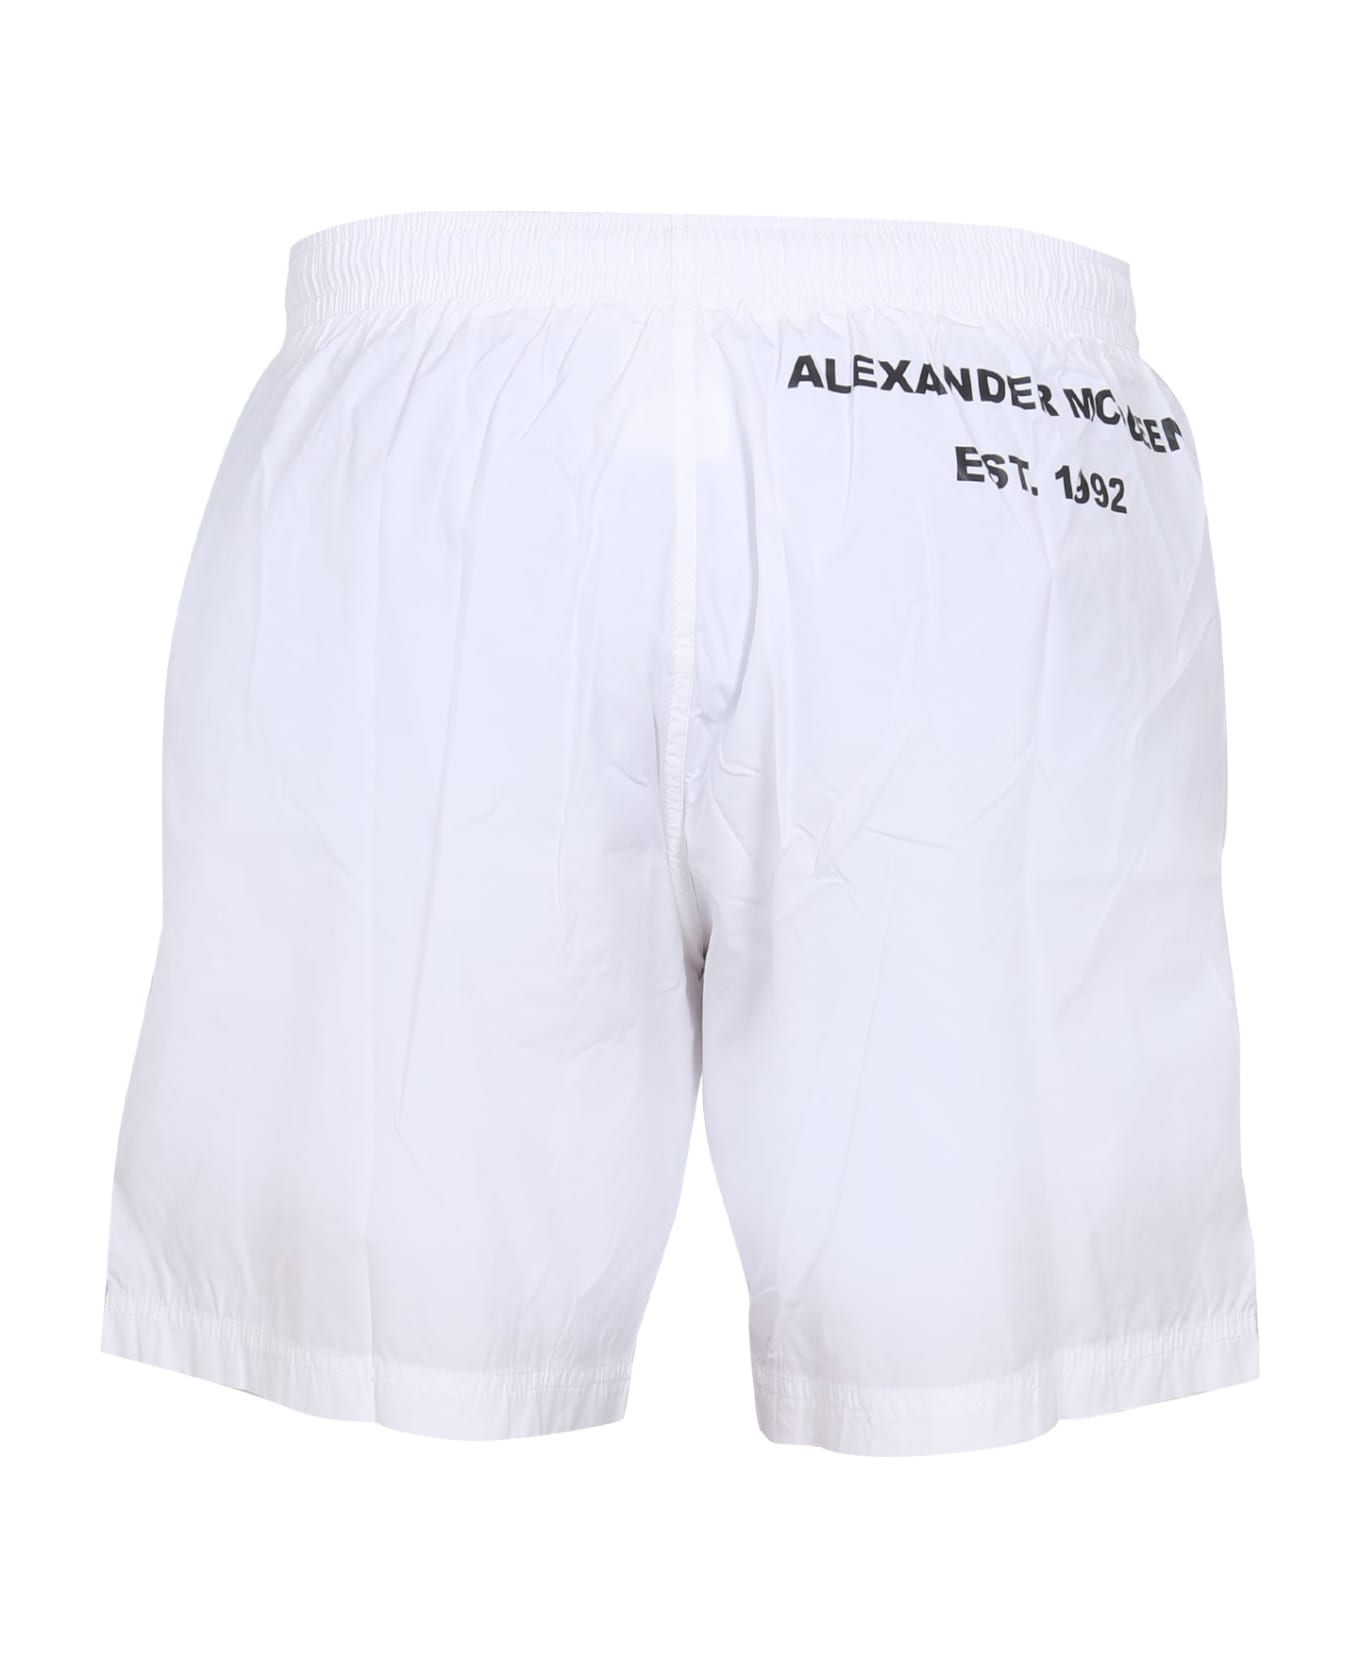 Alexander McQueen Swim Trunks - White Multicolor